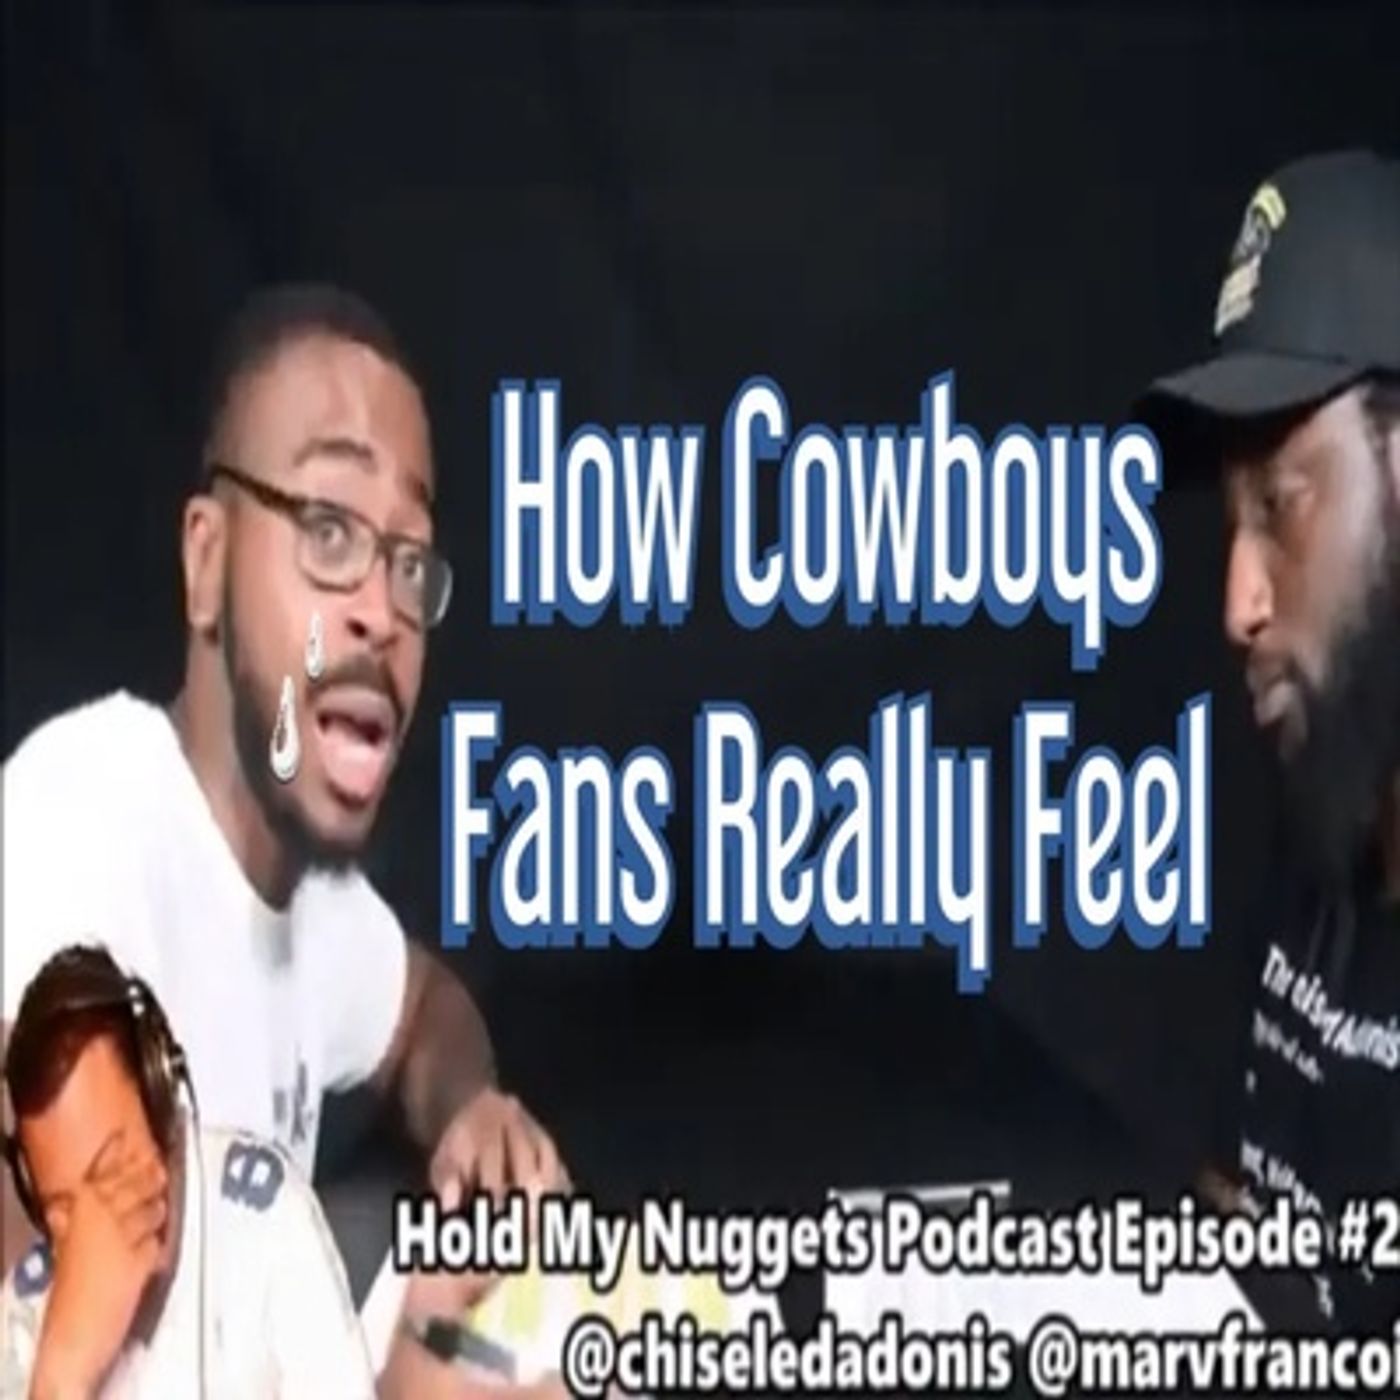 The Dallas Cowboys Genjutsu Chiseled Adonis Reaction and Rant